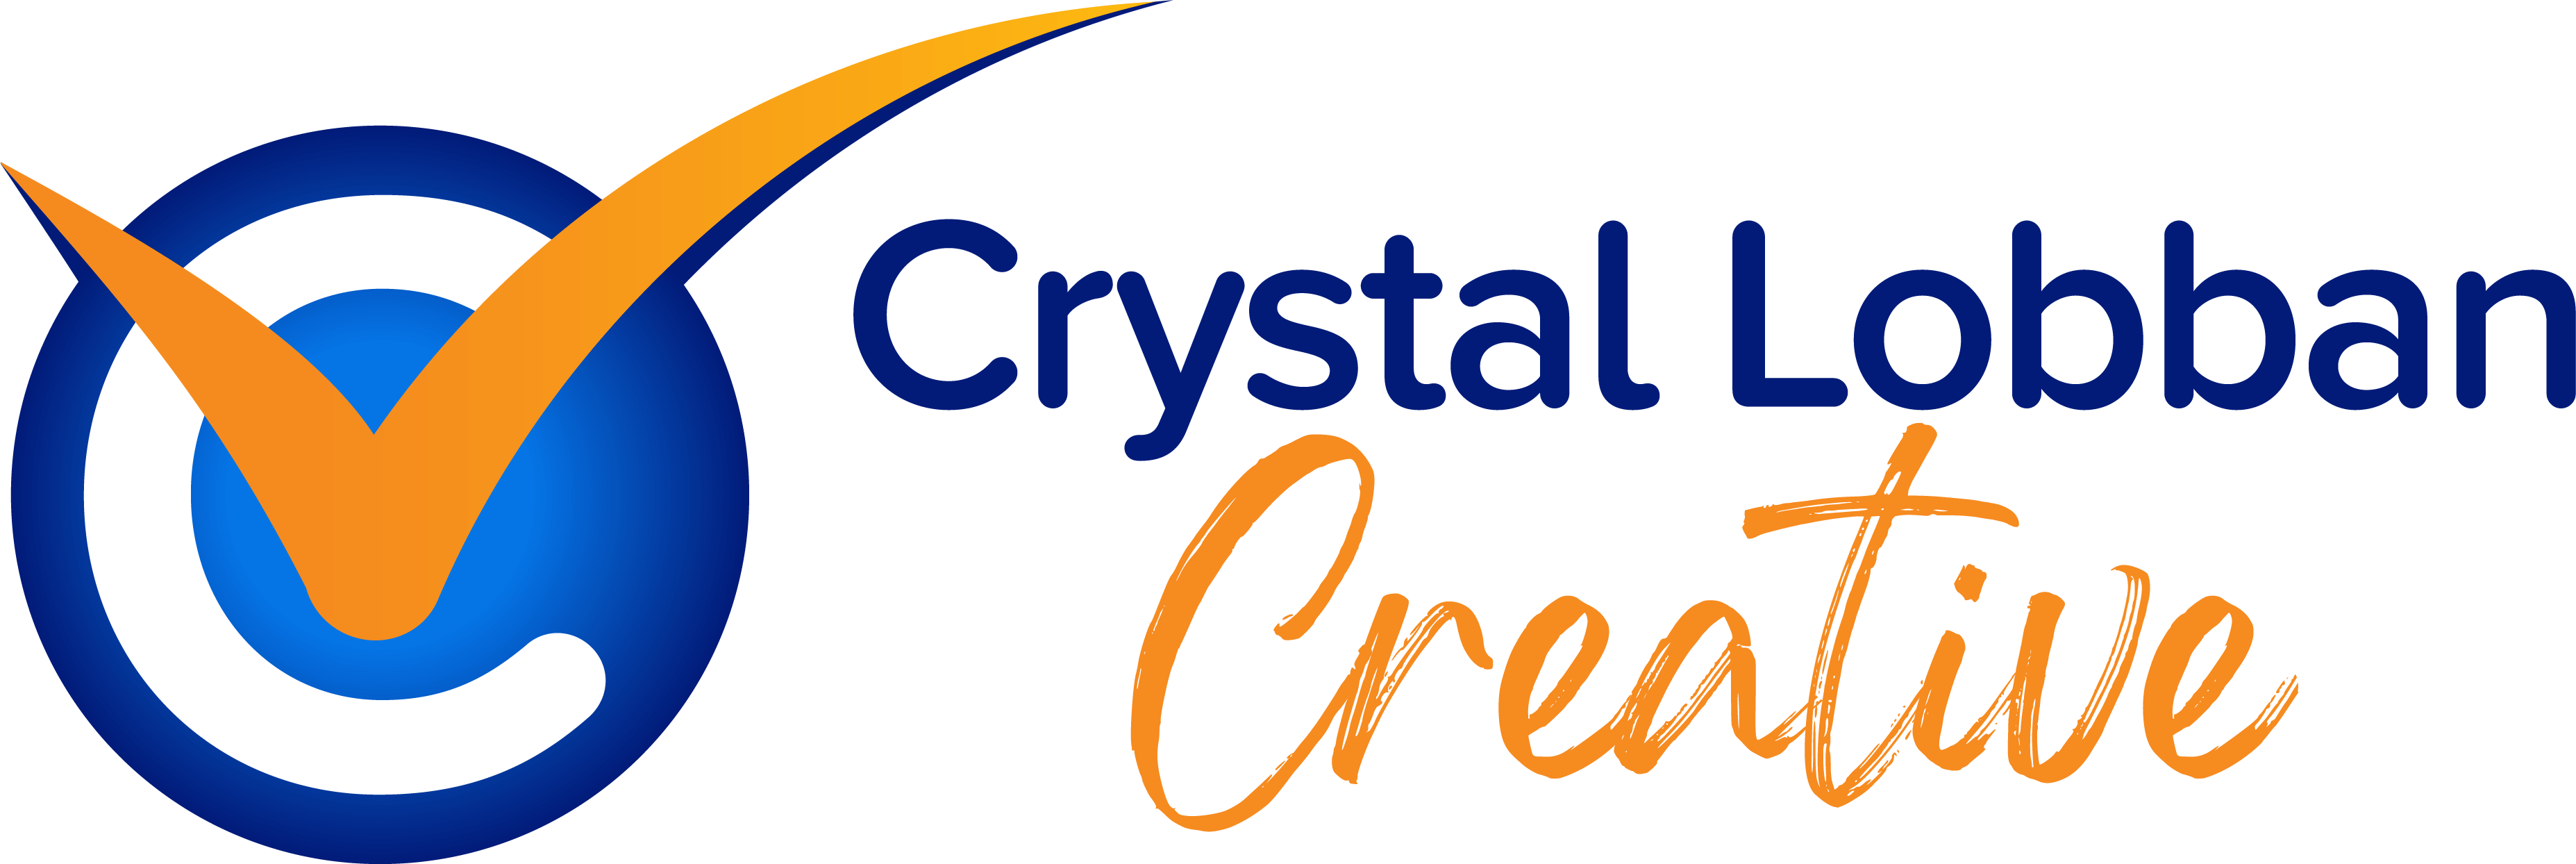 Crystal Lobban Creative's logo.